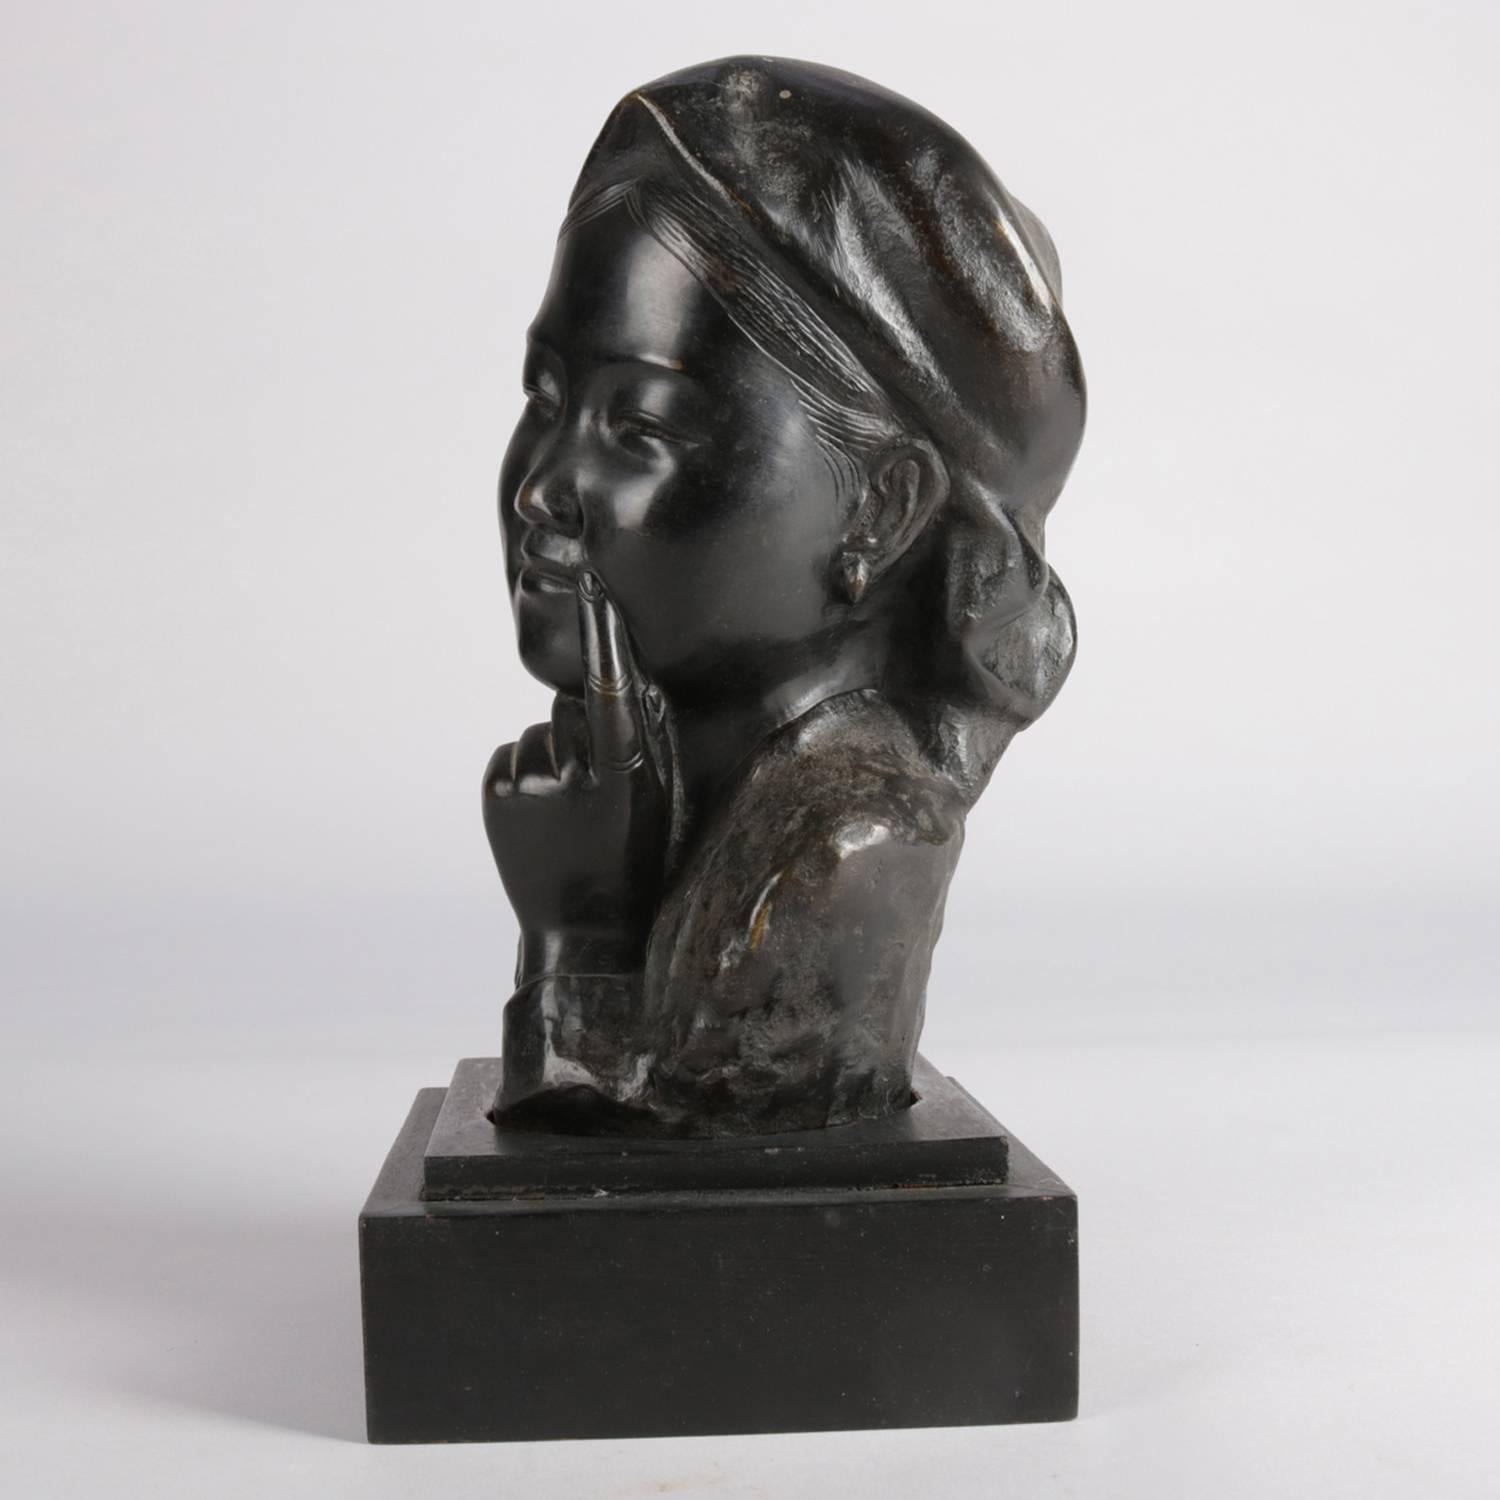 Cast Japanese Bronze Portrait Bust Sculpture of Pensive Young Girl, Wood Base